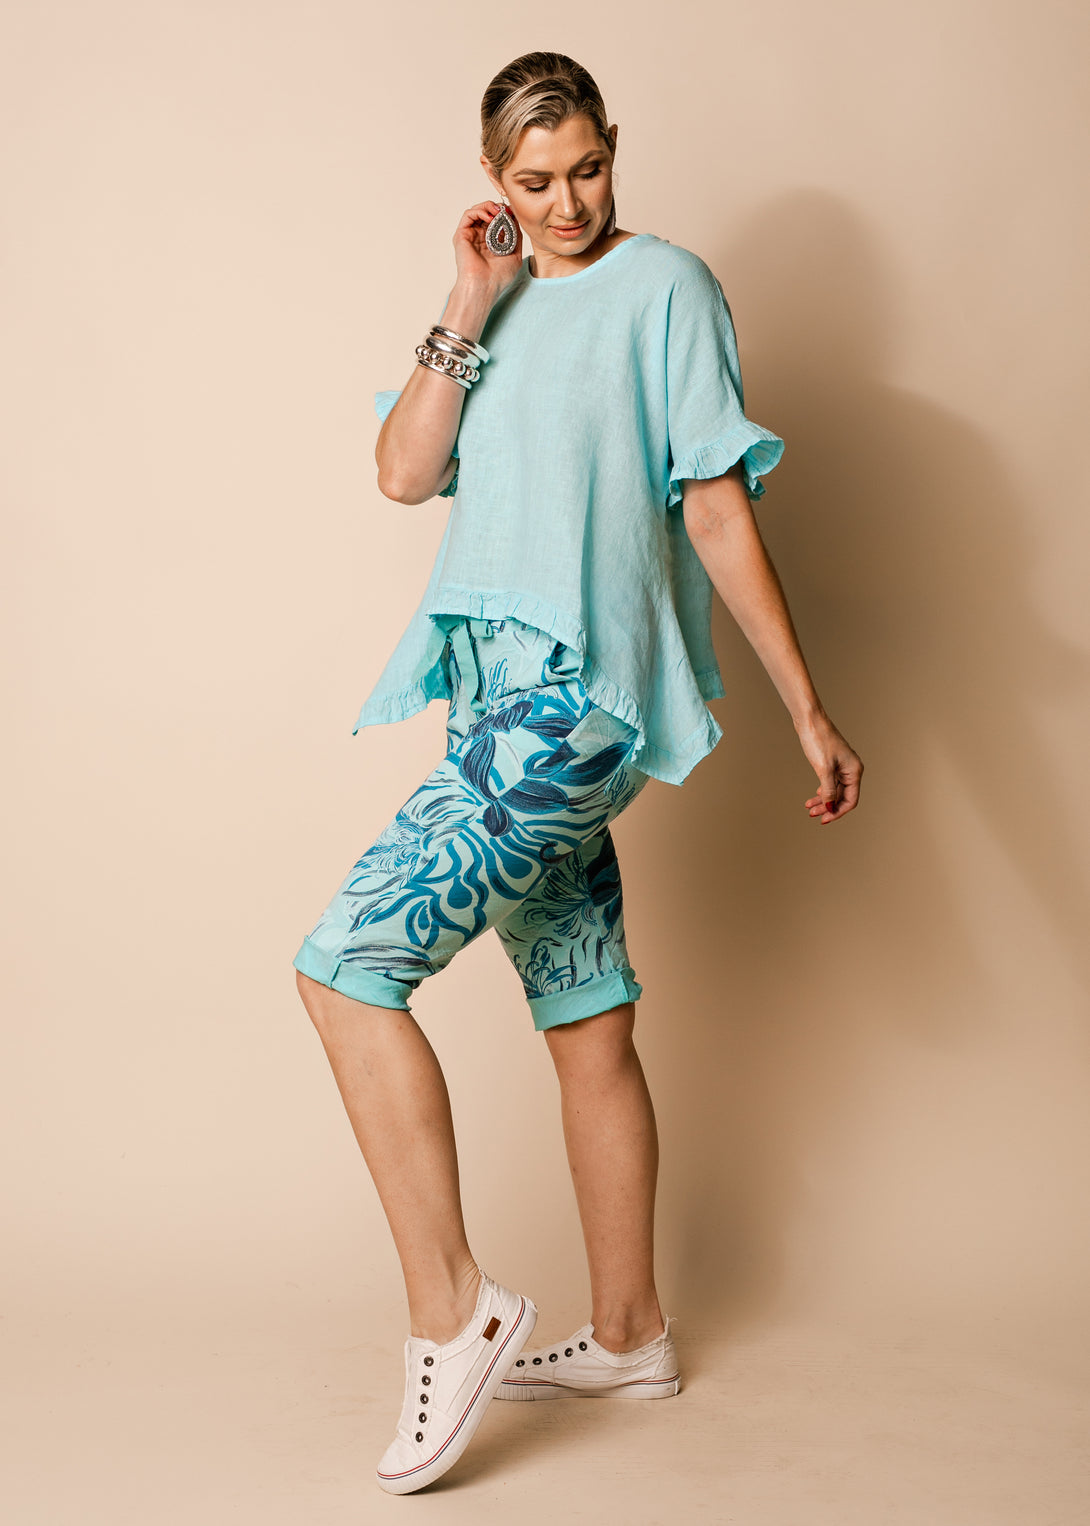 Narine Shorts in Aqua Mist - Imagine Fashion